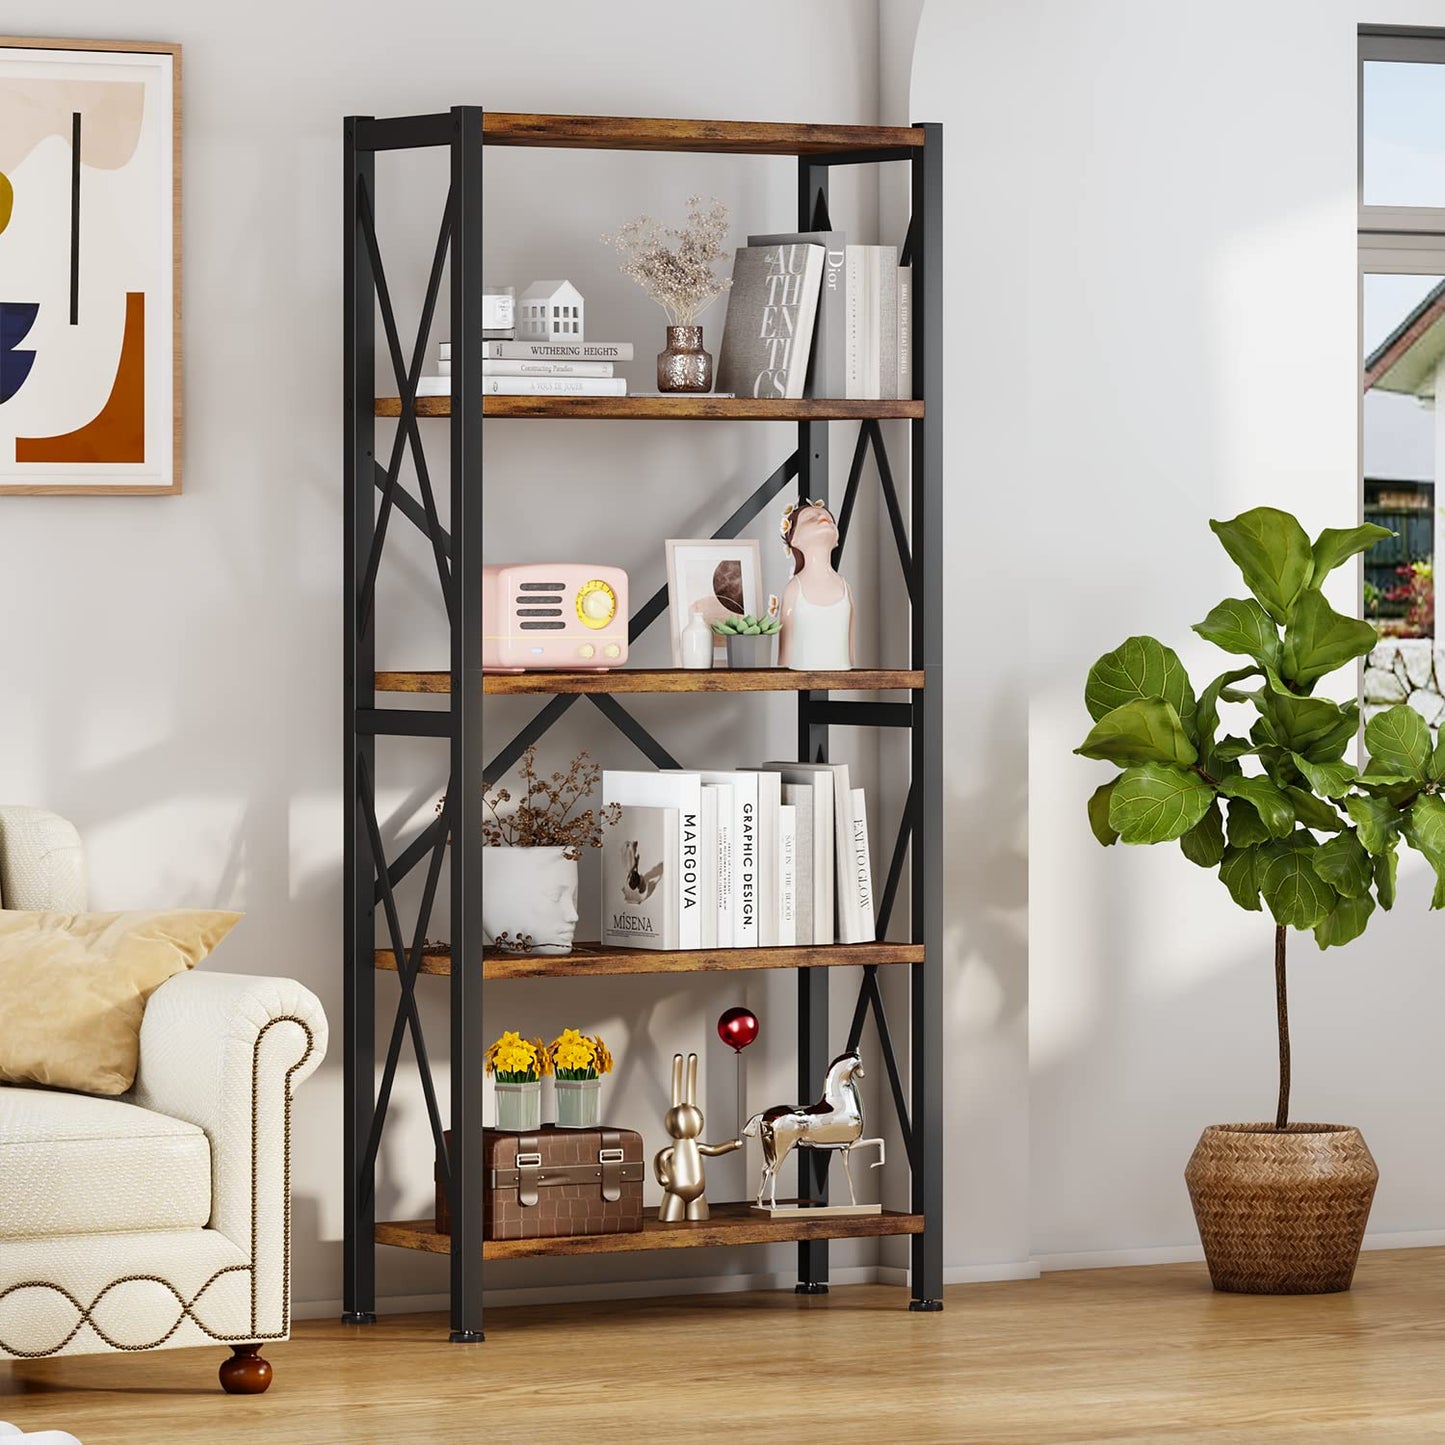 Homeiju 5-Tier Bookshelf,Wood Bookcase,Book Shelf with Steel Frame, Storage Rack with Open Shelves, Rustic Standing Bookshelves Ladder Shelf